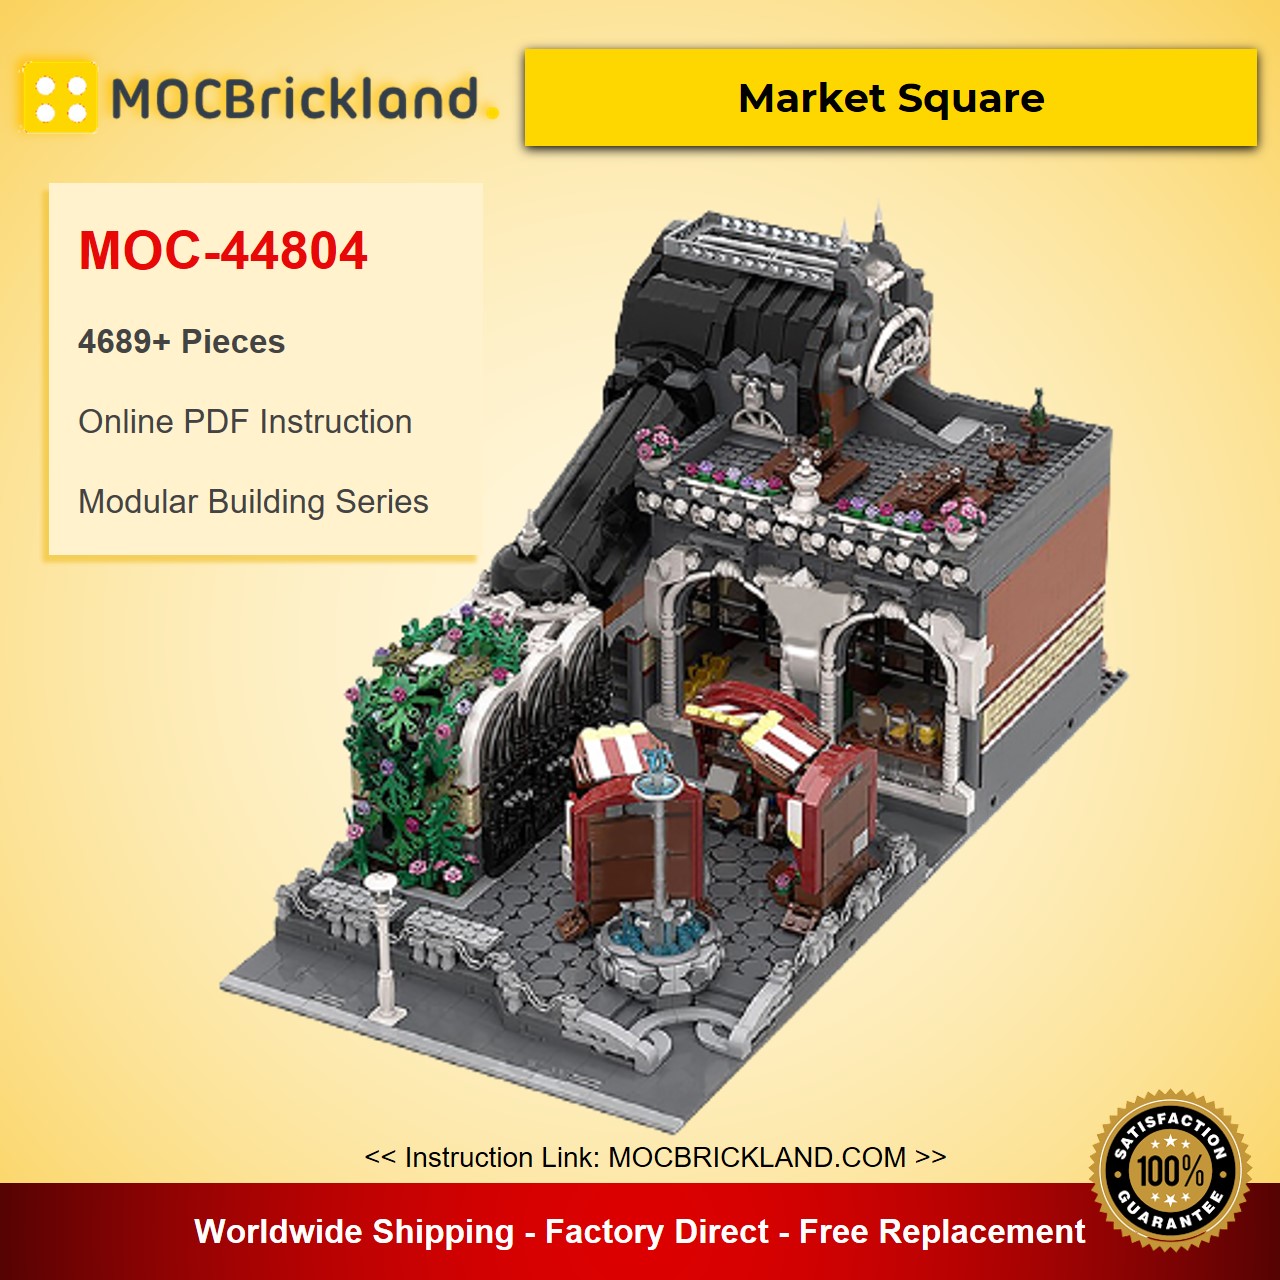 MOCBRICKLAND MOC-44804 Market Square